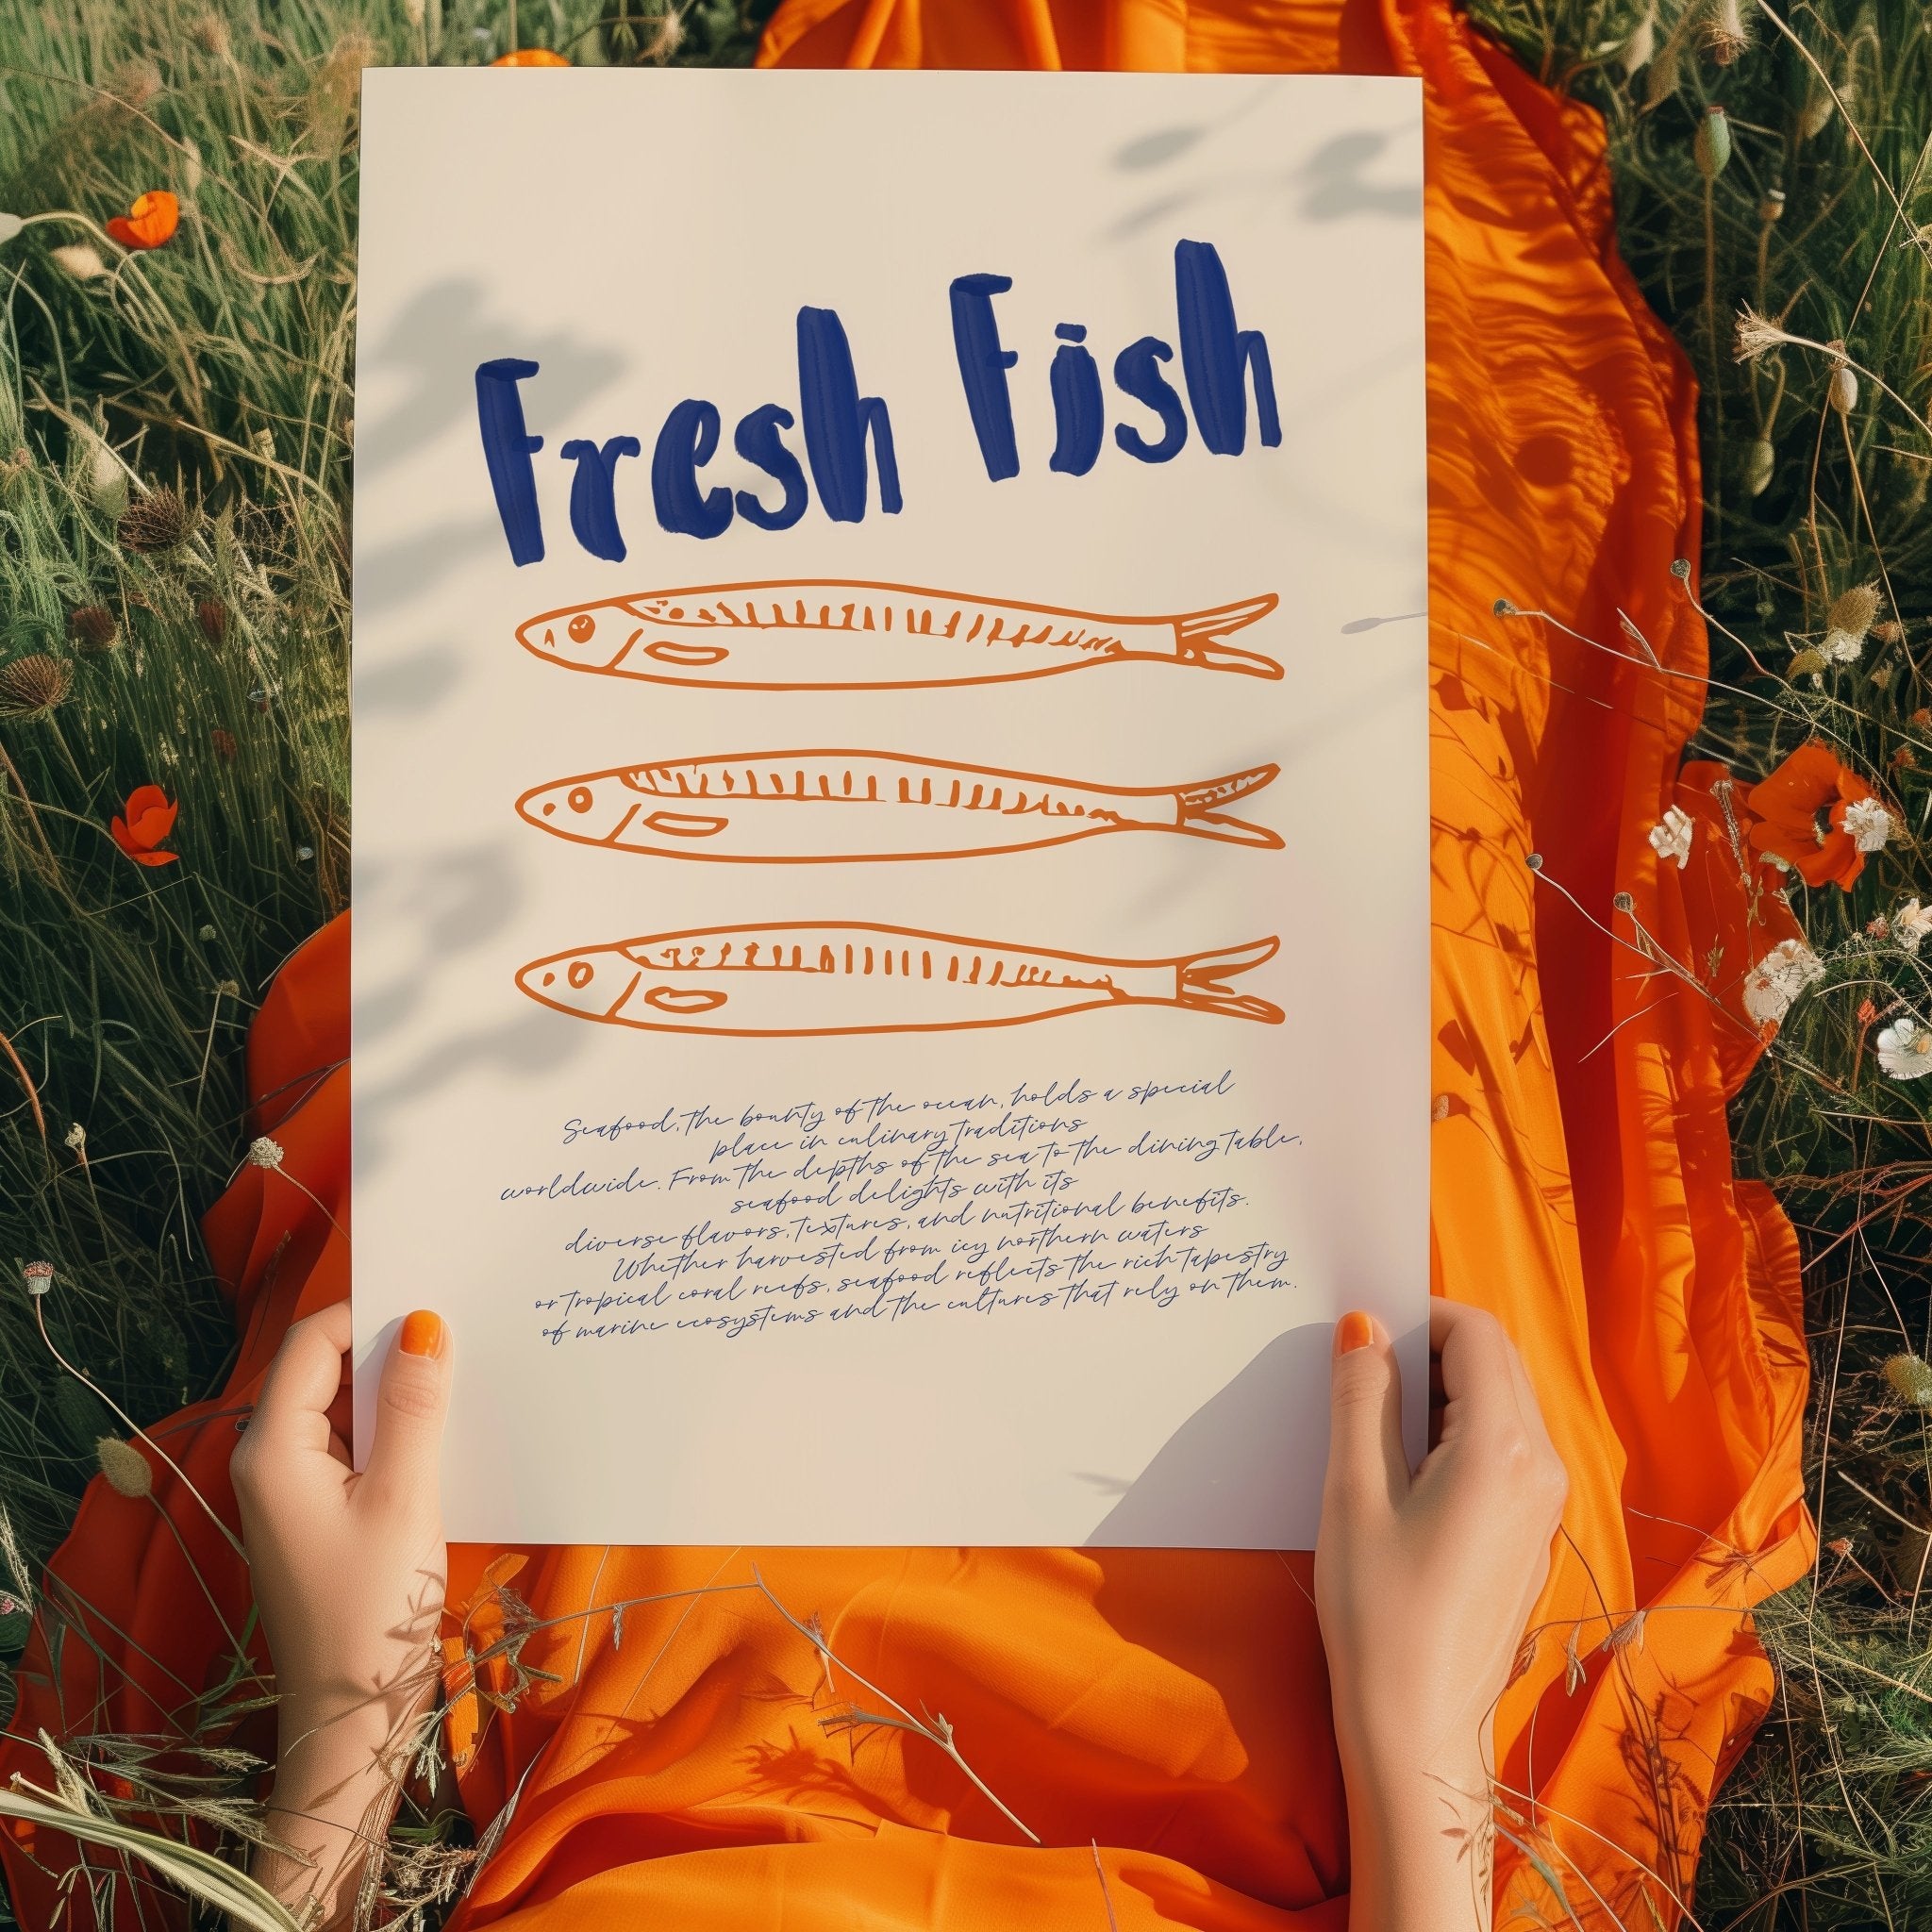 Retro Fresh Fish Print